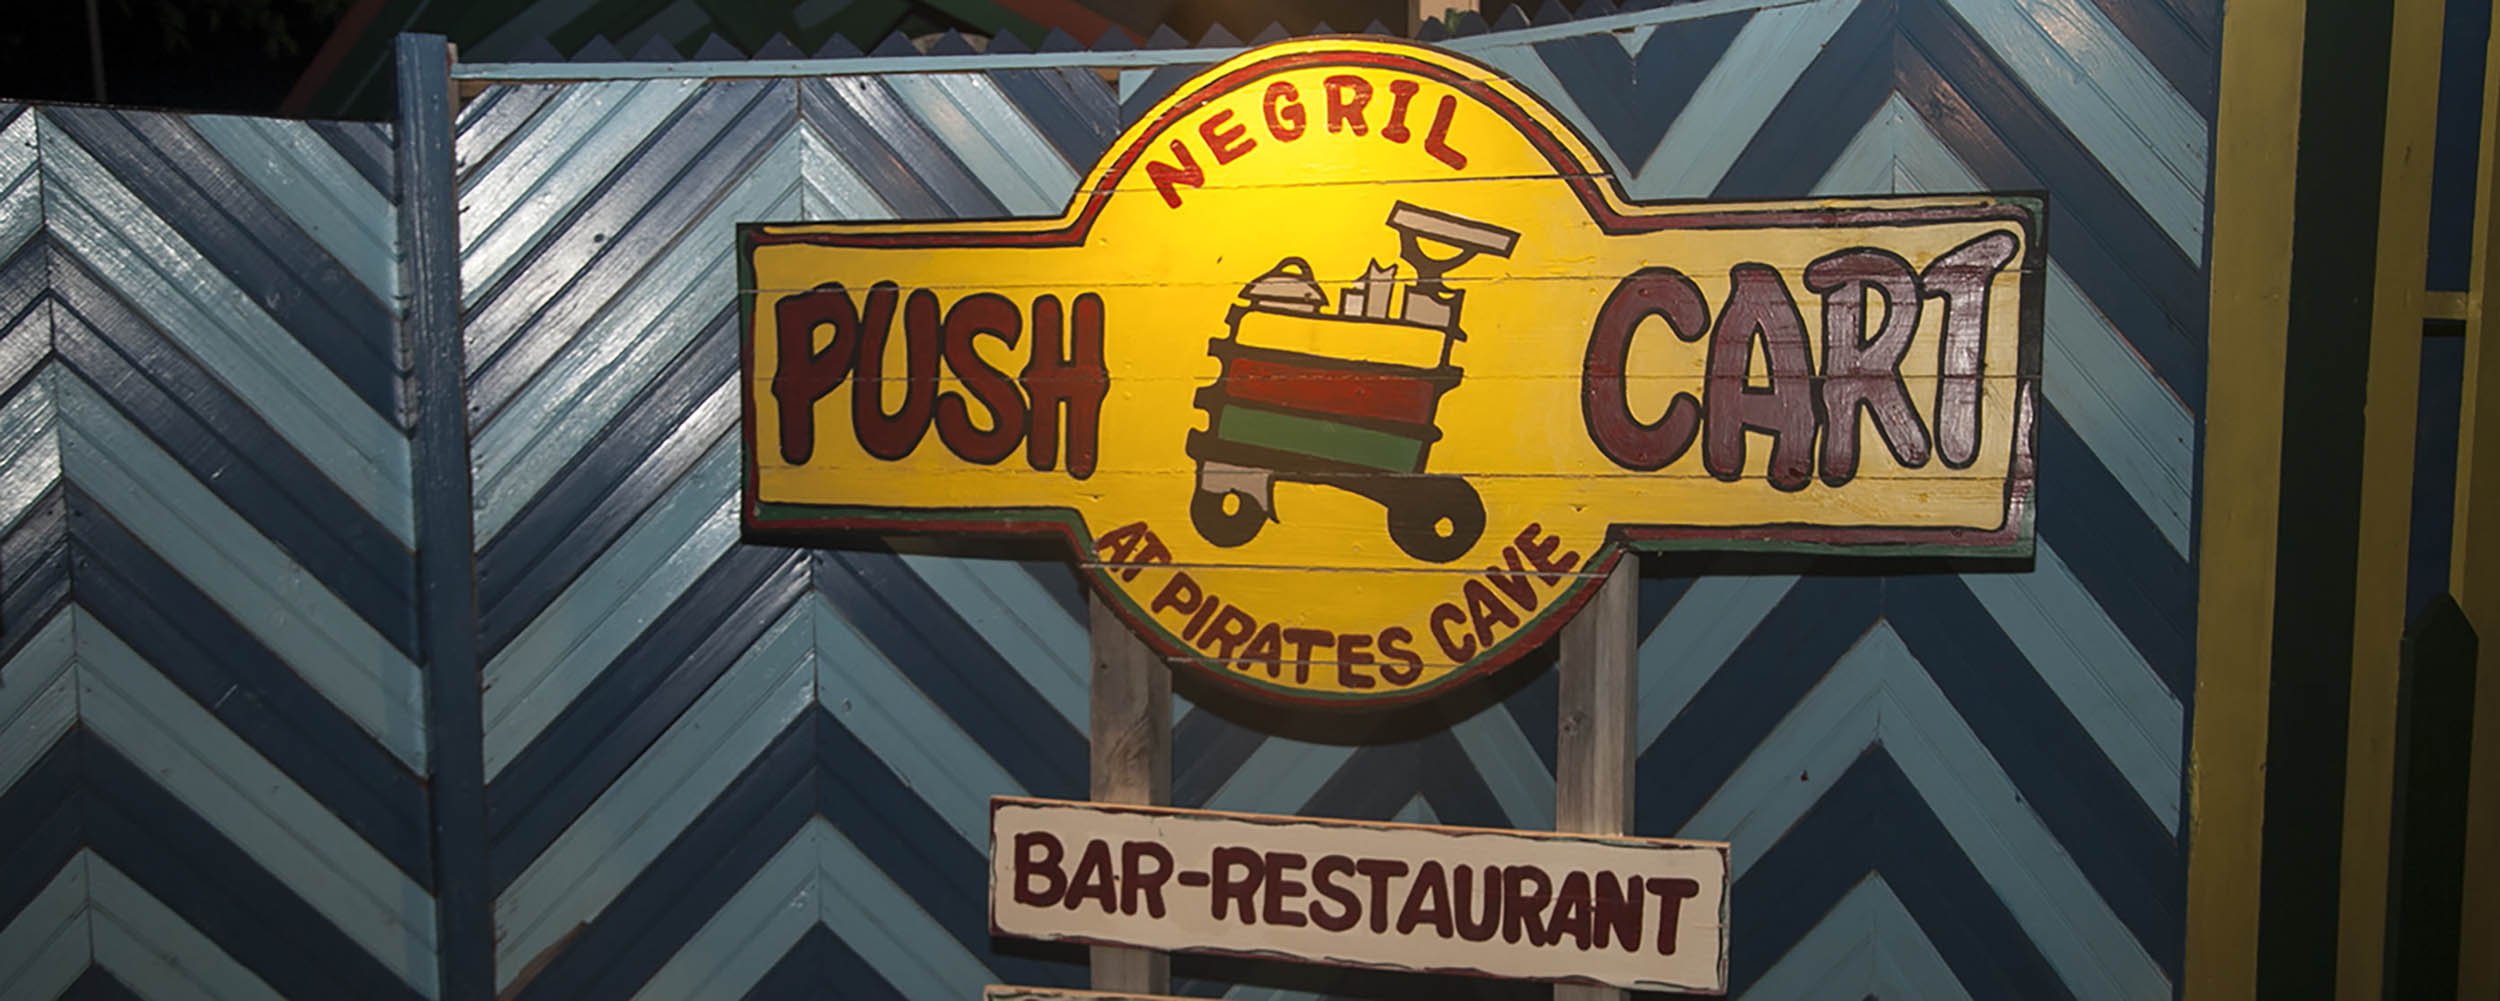 Push Cart Restaurant and Bar, West End, Negril Jamaica